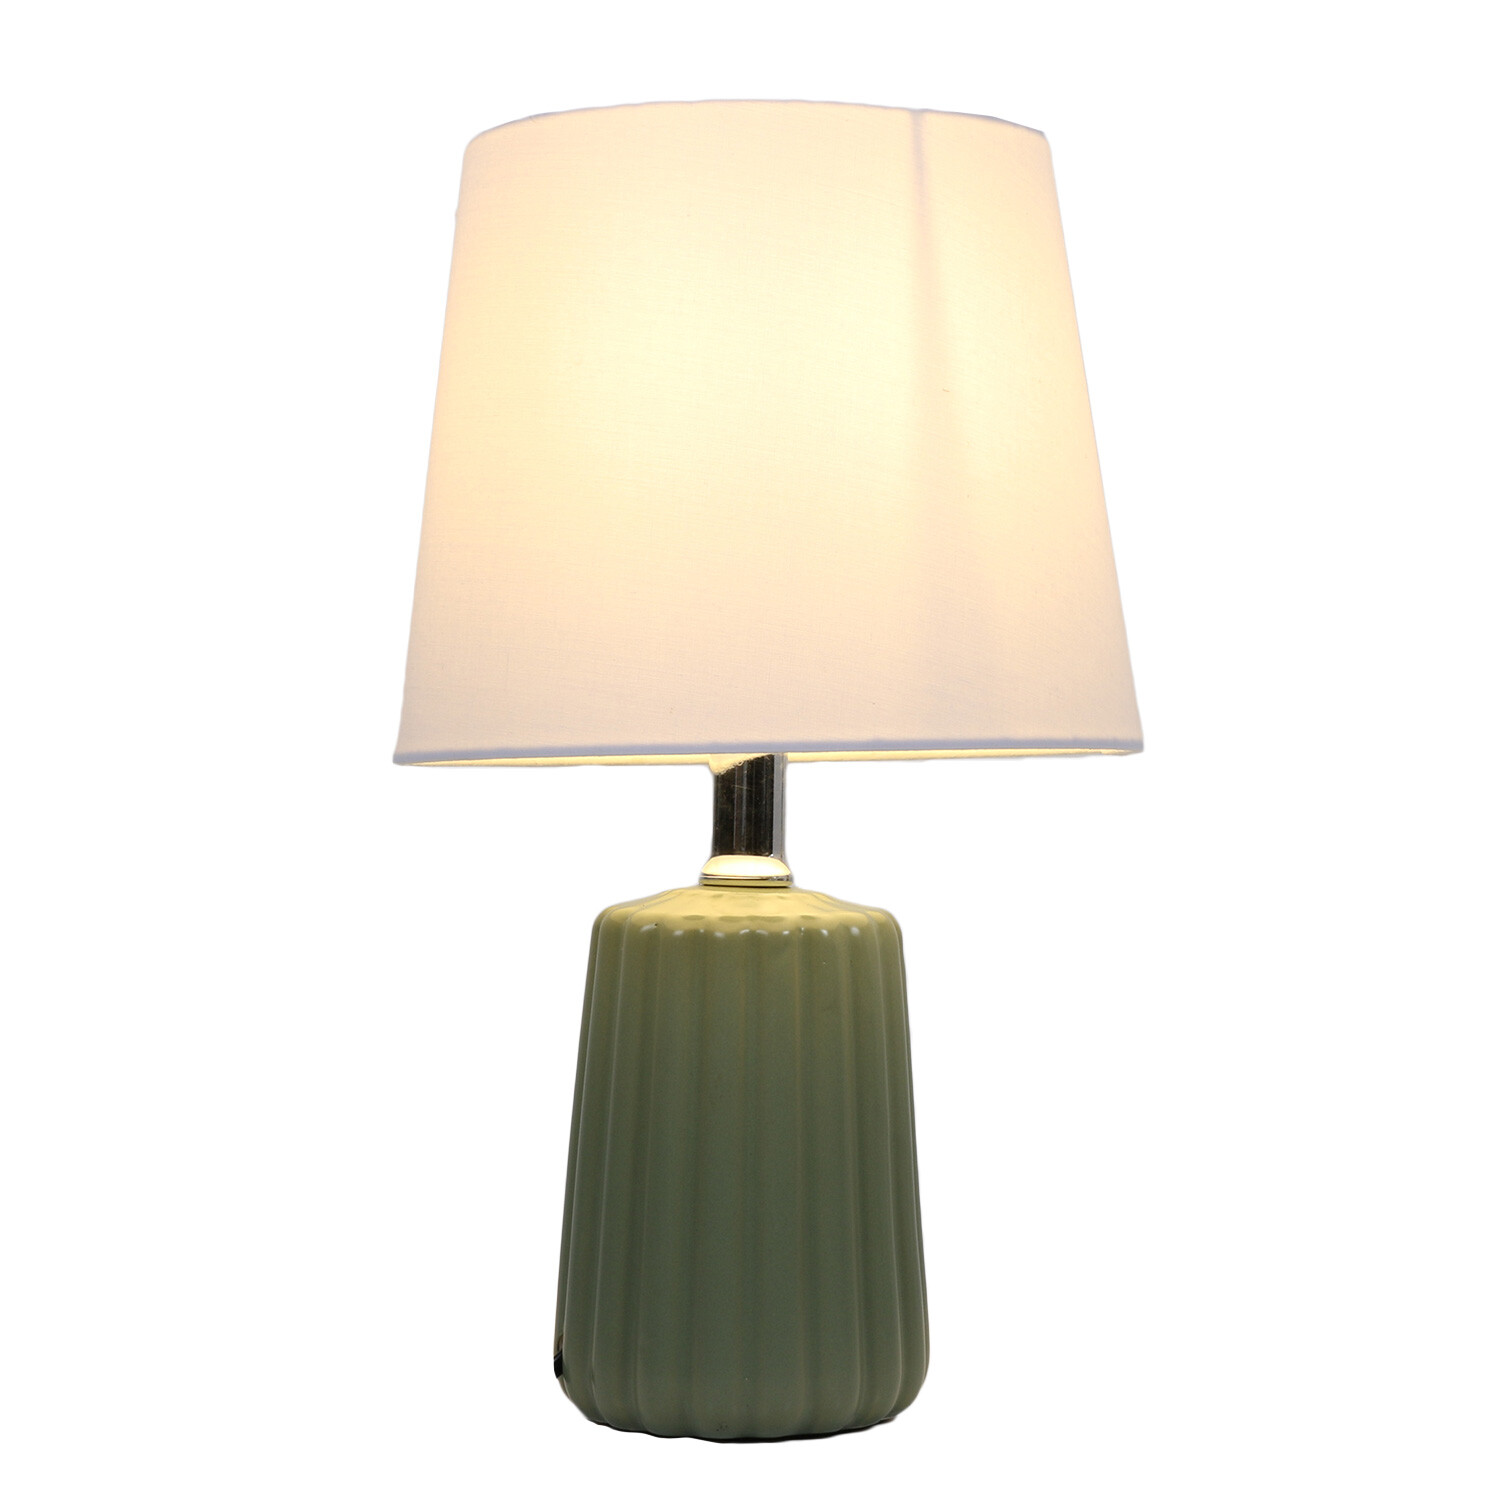 Caleb Table Lamp - Green Image 2